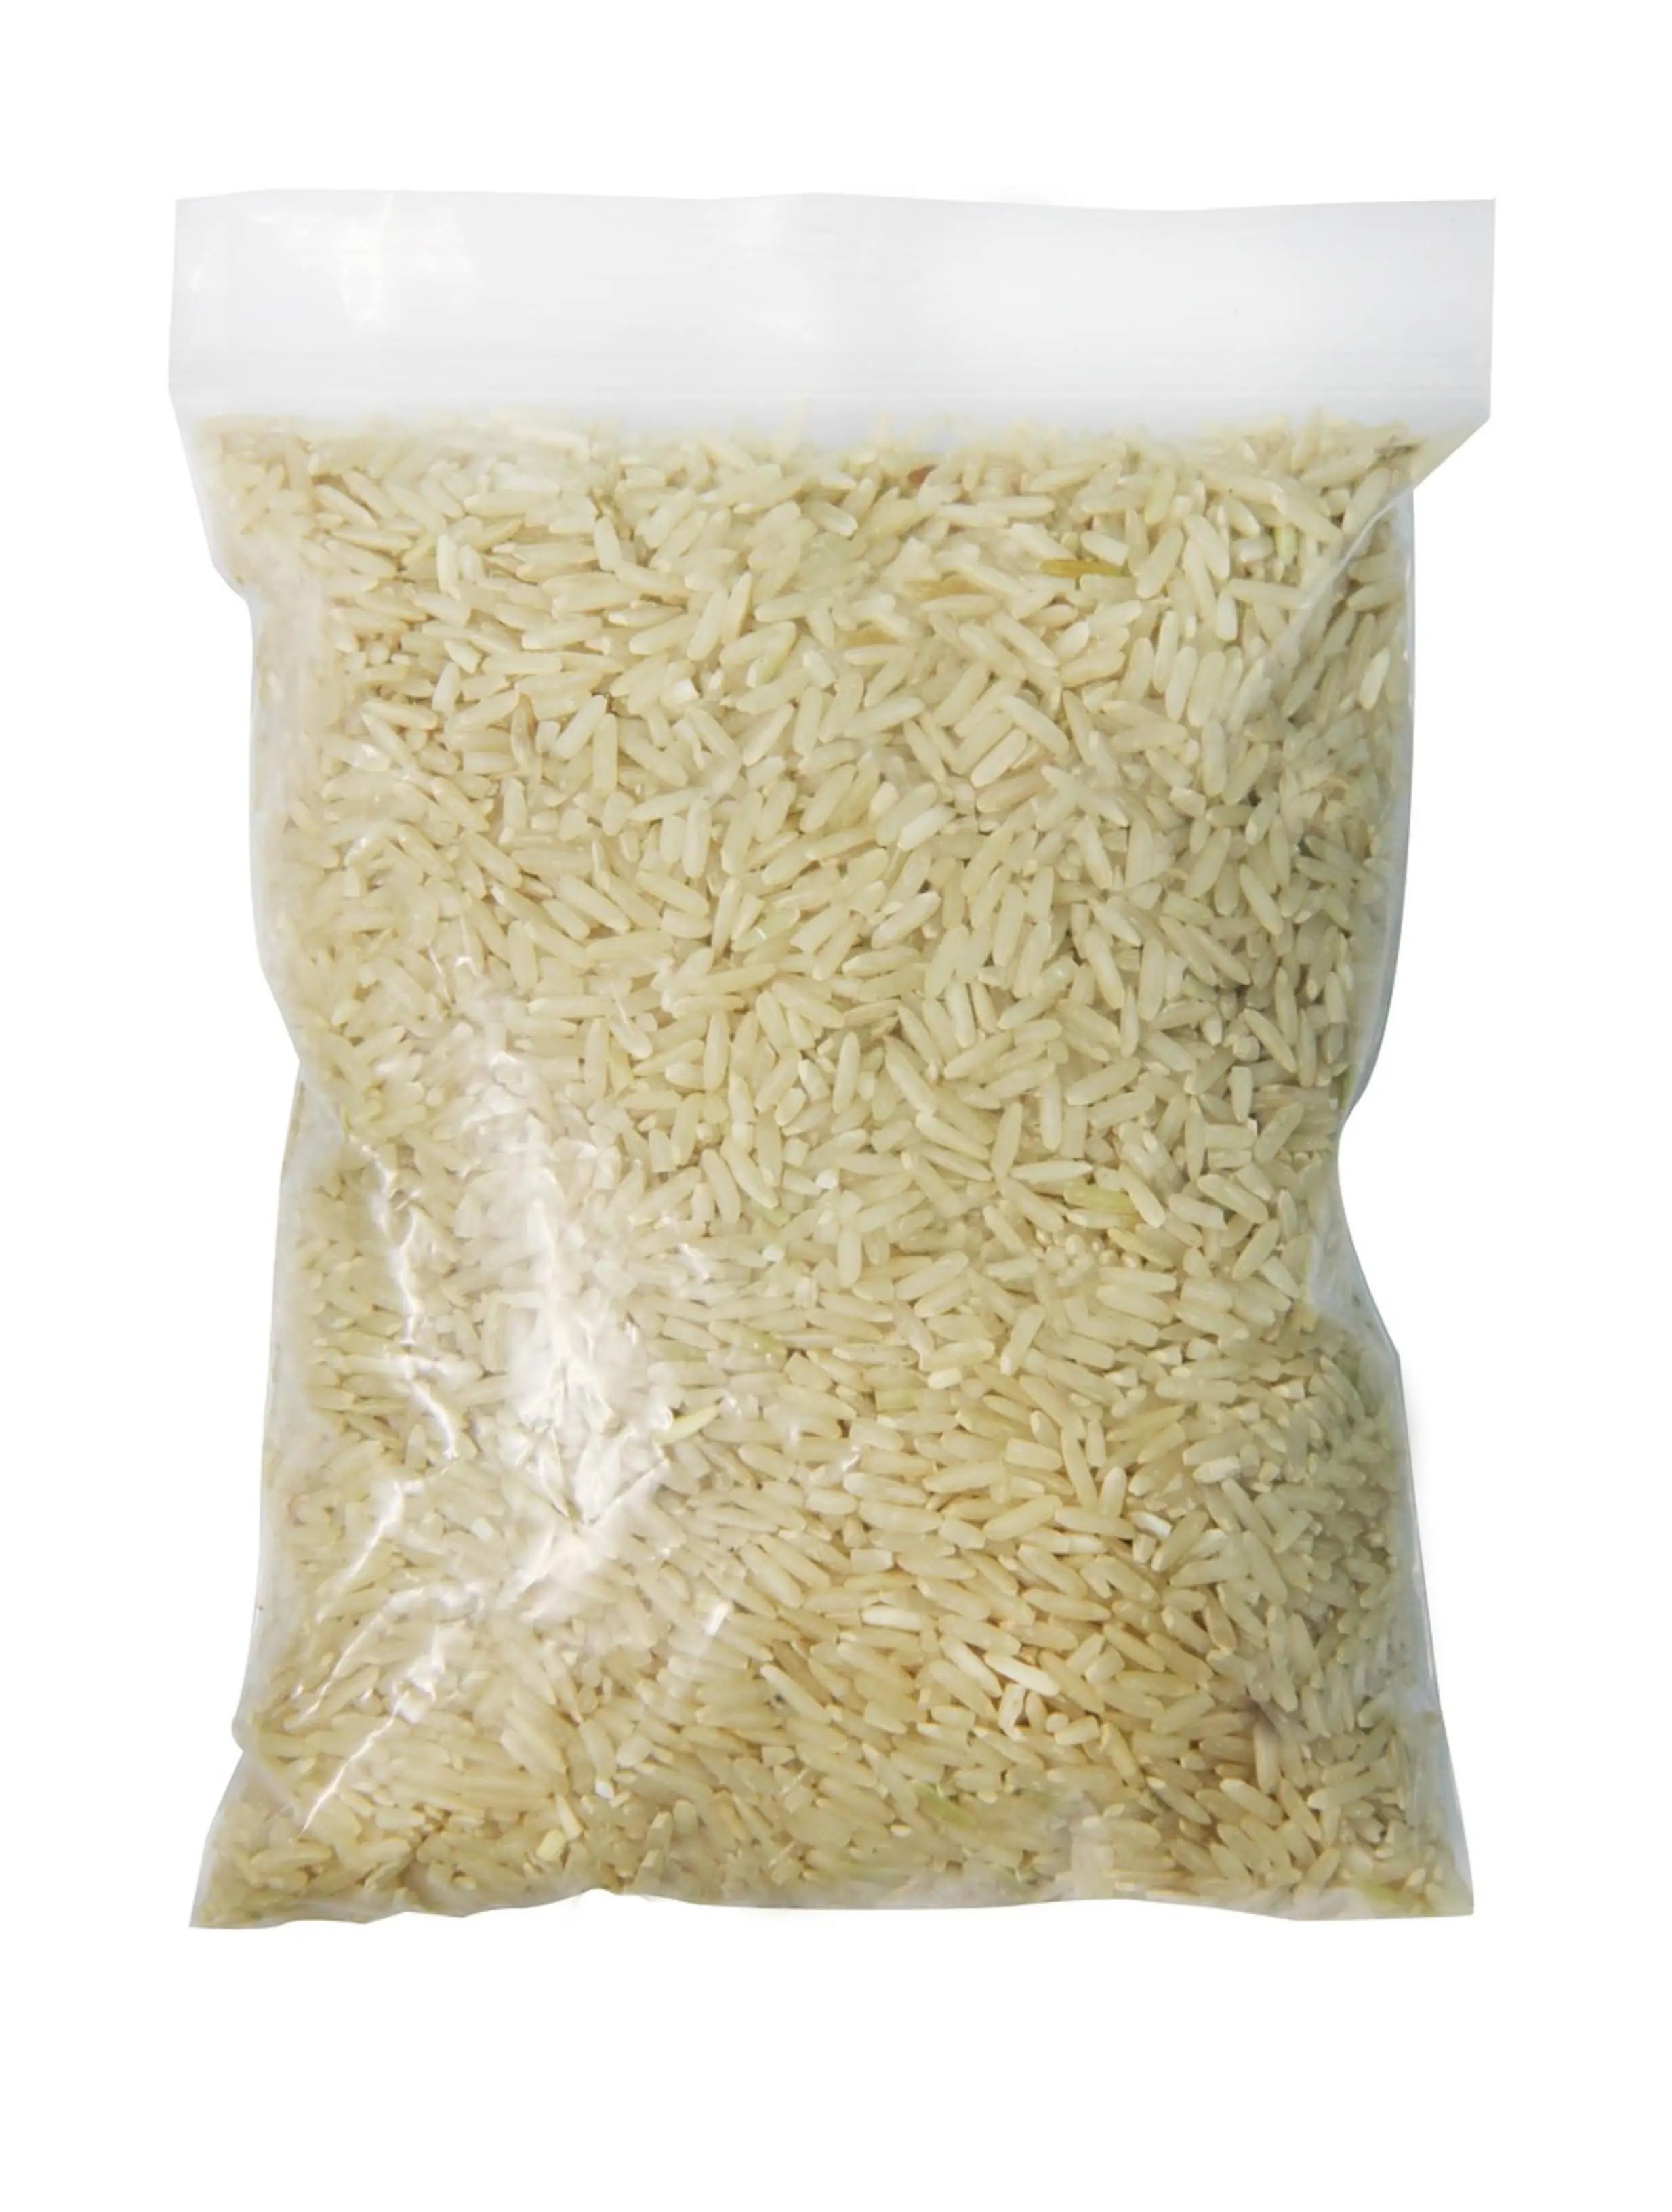 White Rice 1 Kg